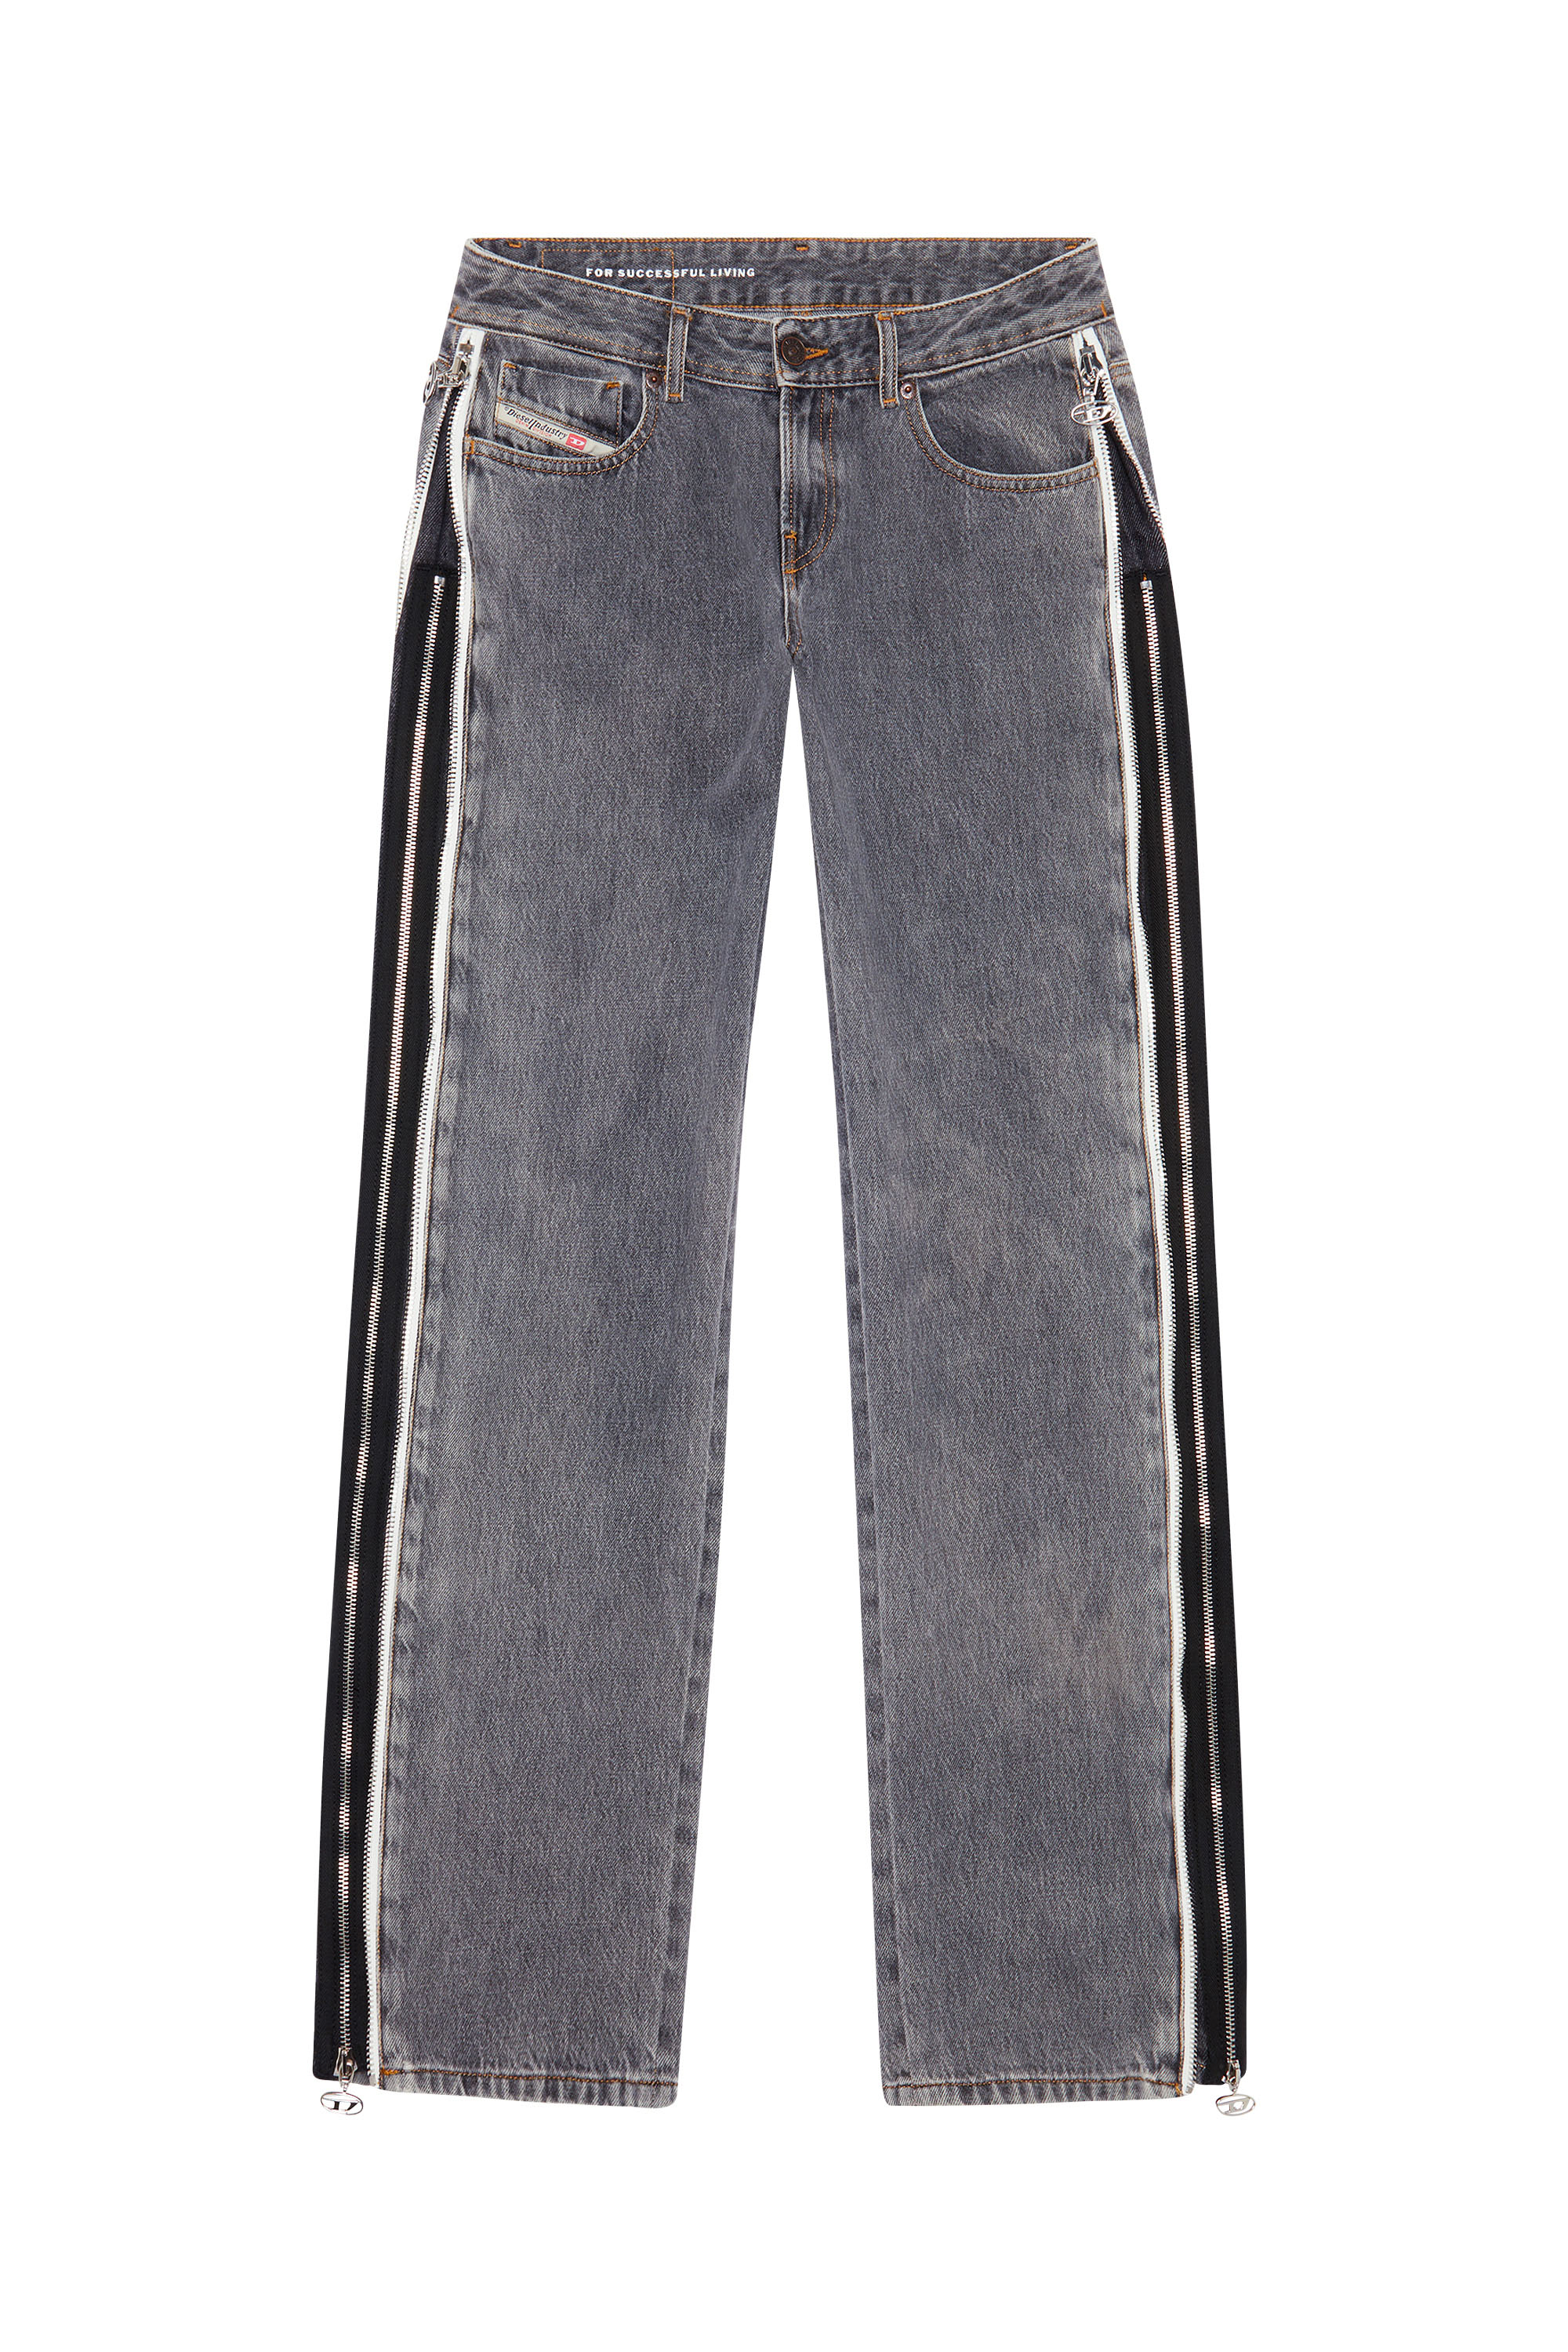 KKR_DIESELDIESEL ディーゼル Straight Jeans 2002 09D17